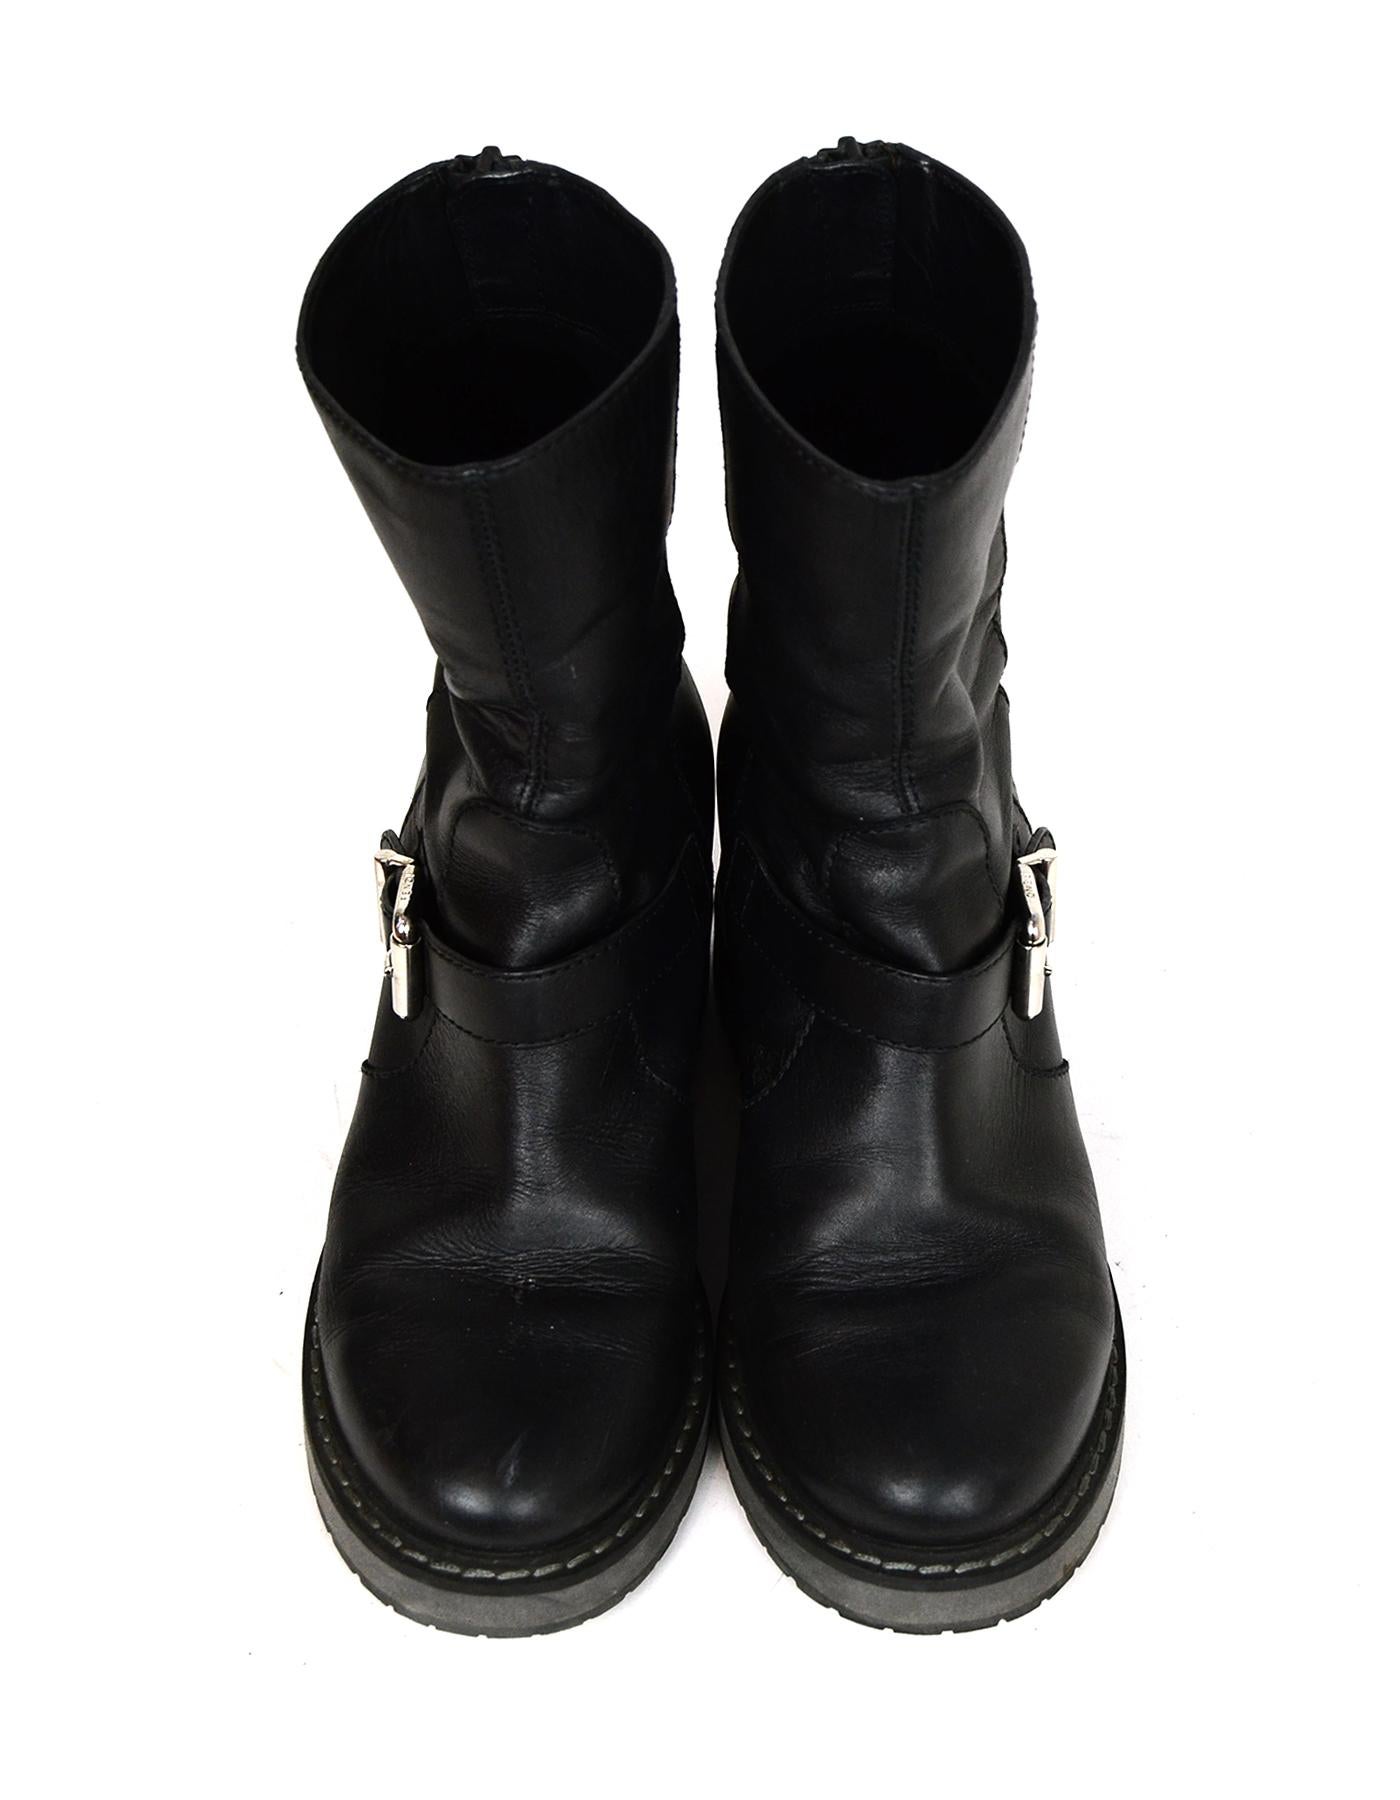 Women's Fendi Black Leather Concealed Wedge Boot sz 38.5